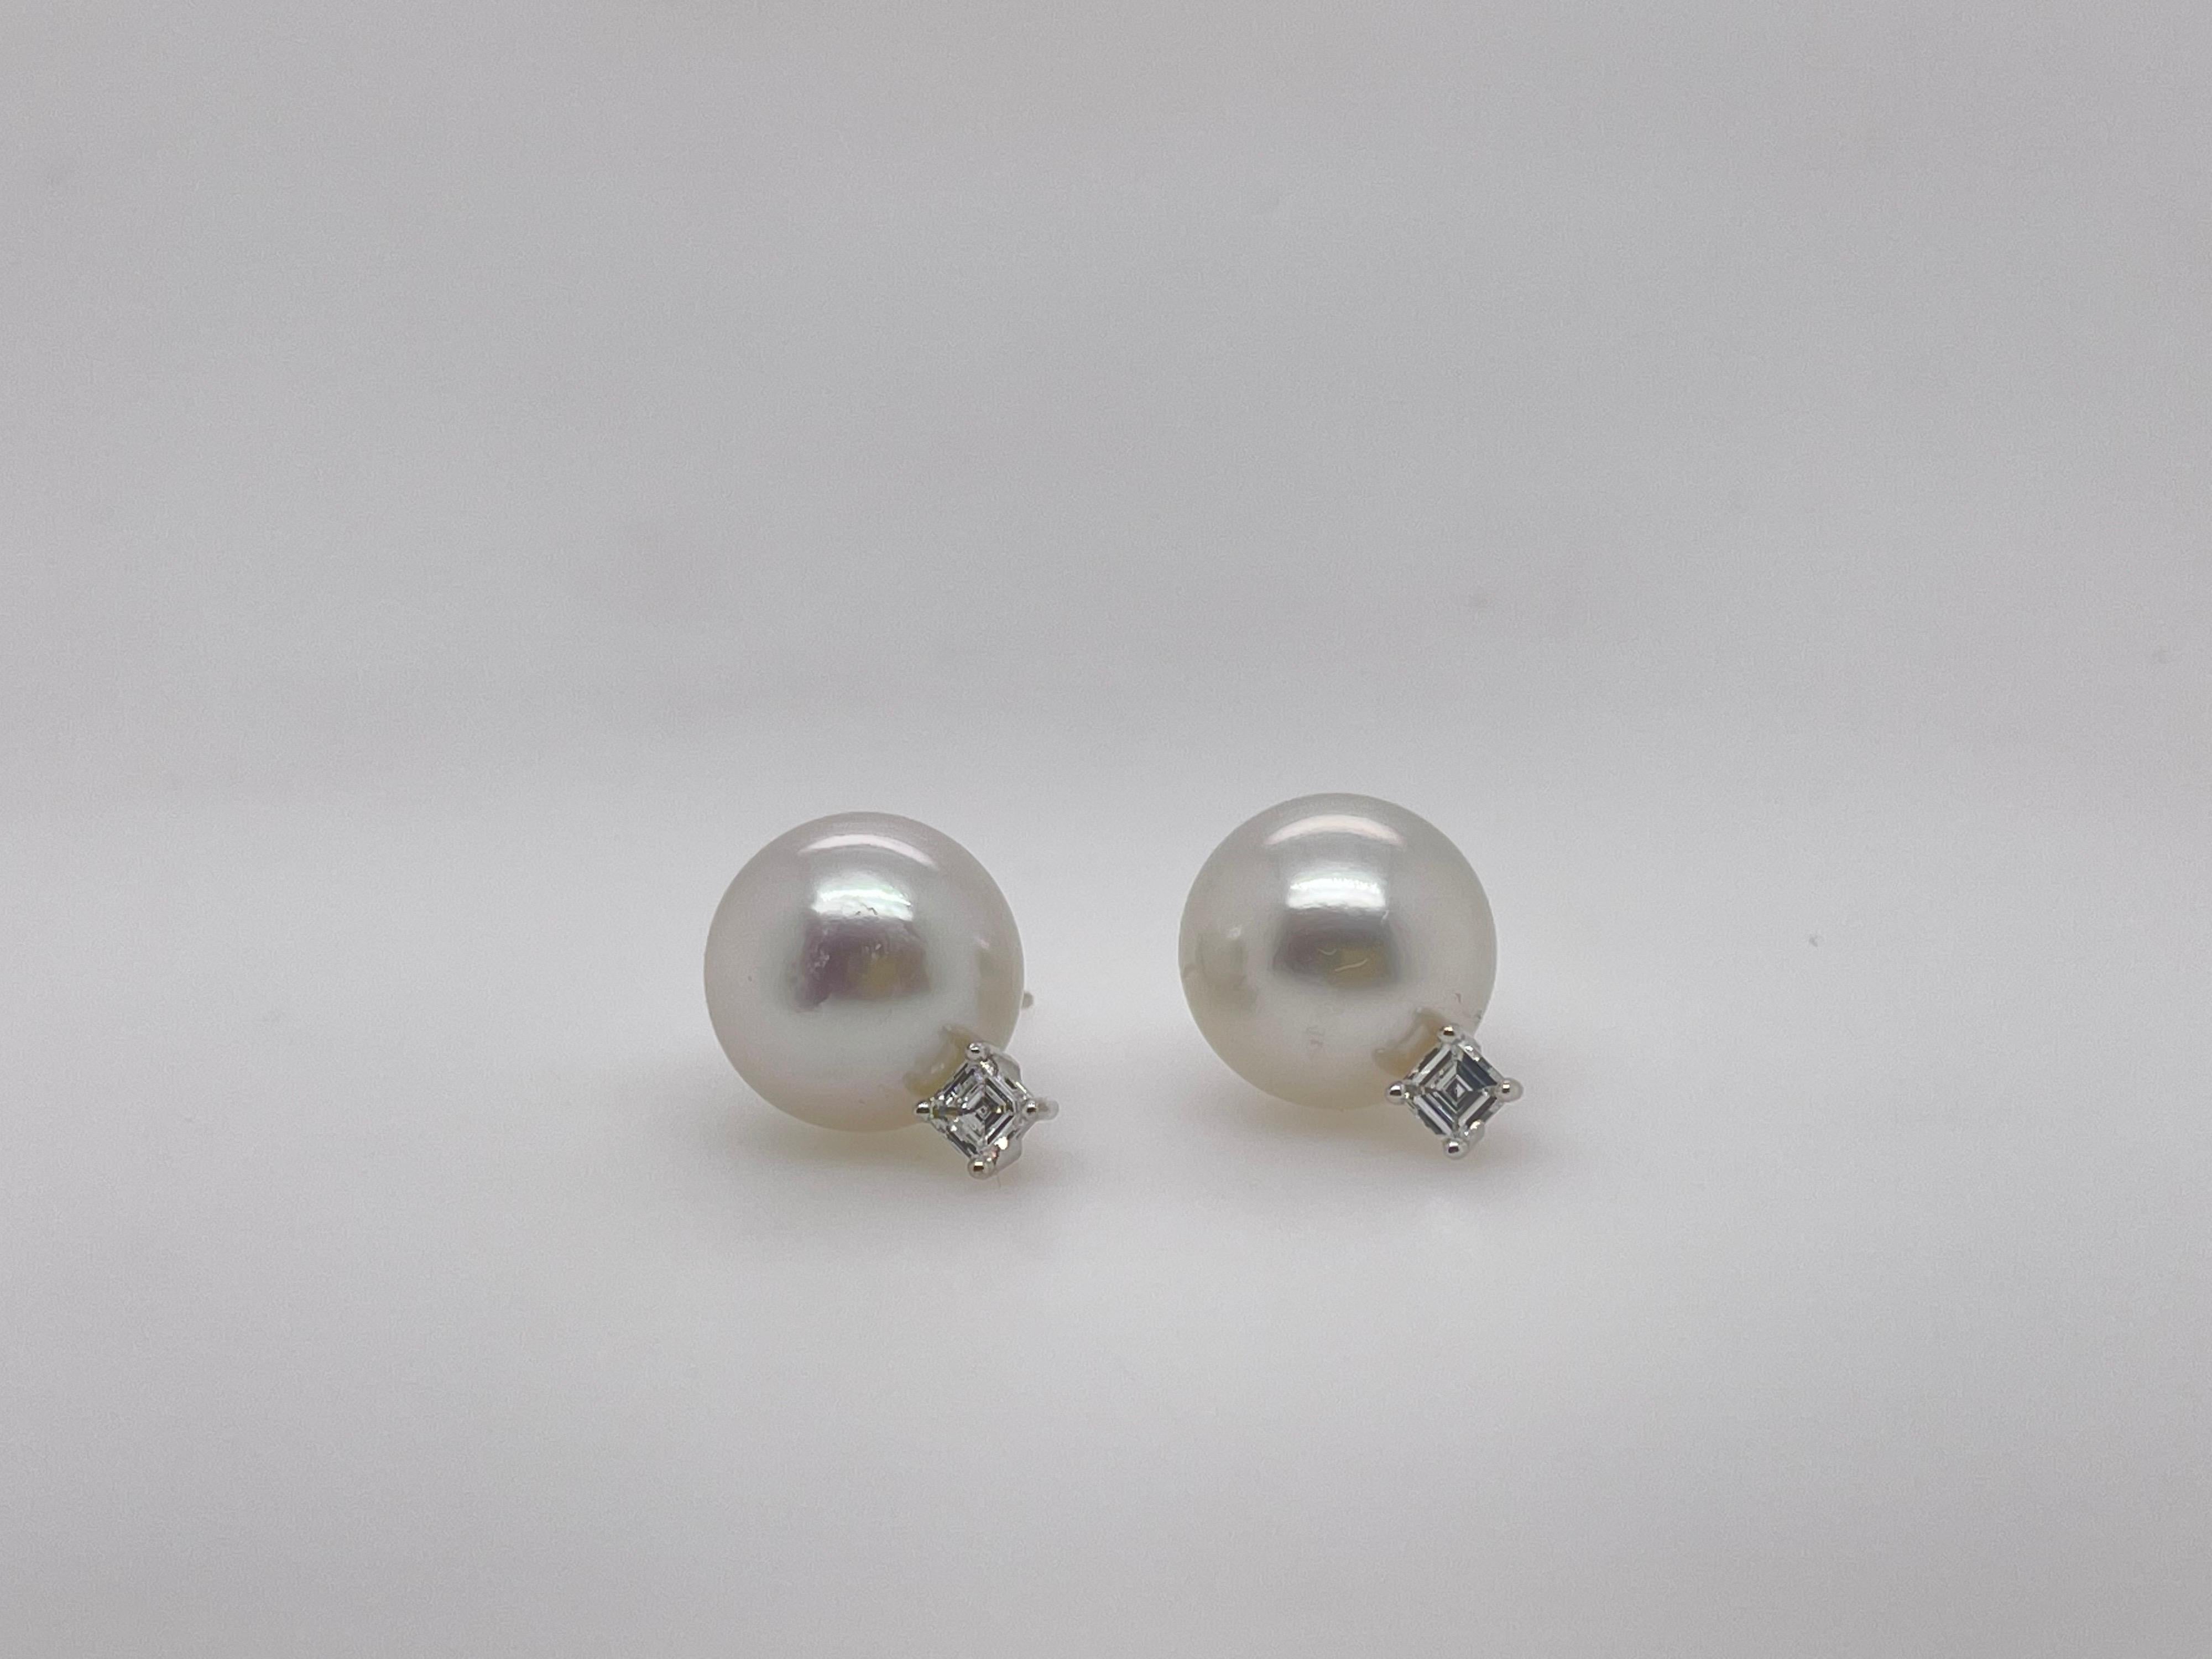 White Gold South Sea Pearl & Diamond Stud Earrings
14kt white gold 
12.5-13mm pearls
2 diamonds= 0.40ct VS F 
